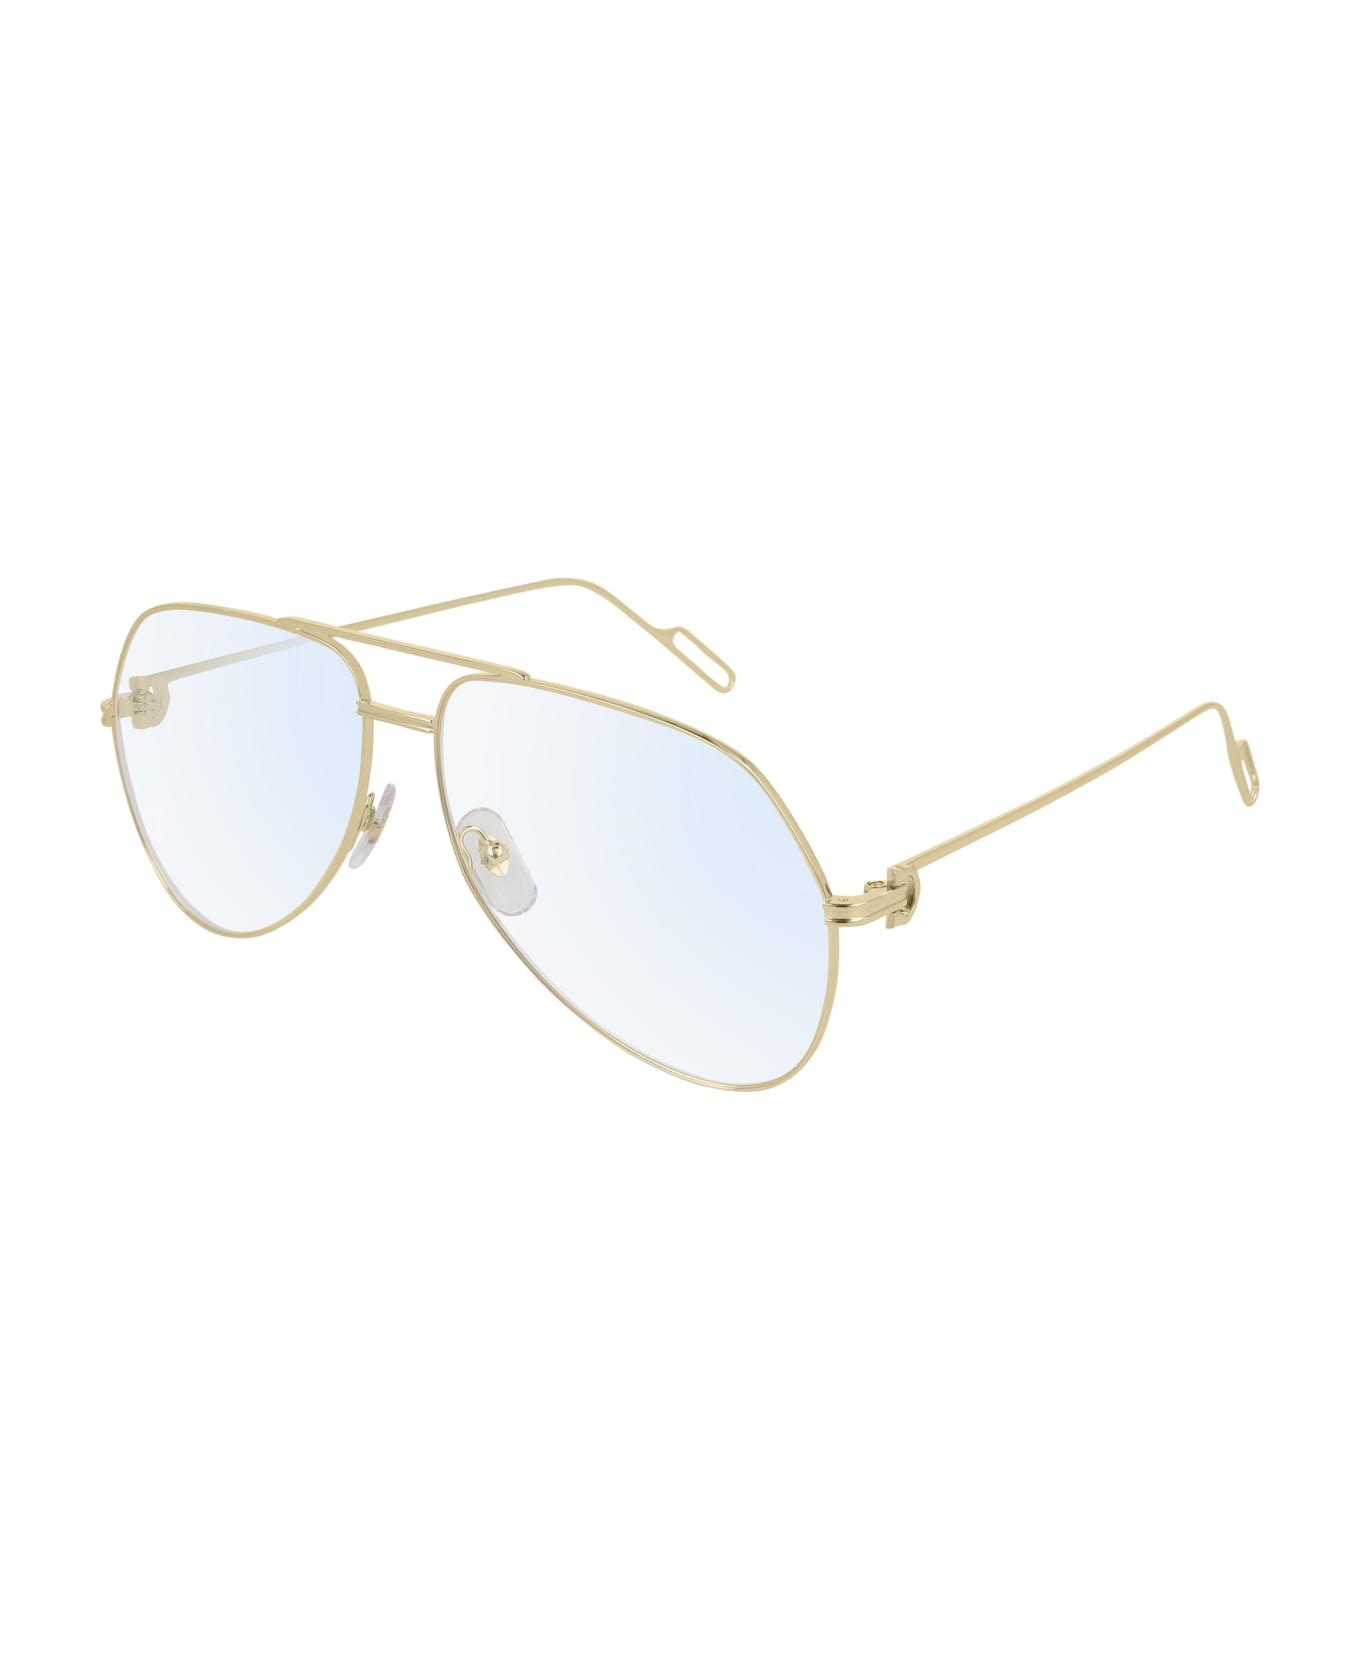 Cartier Eyewear Glasses - Oro